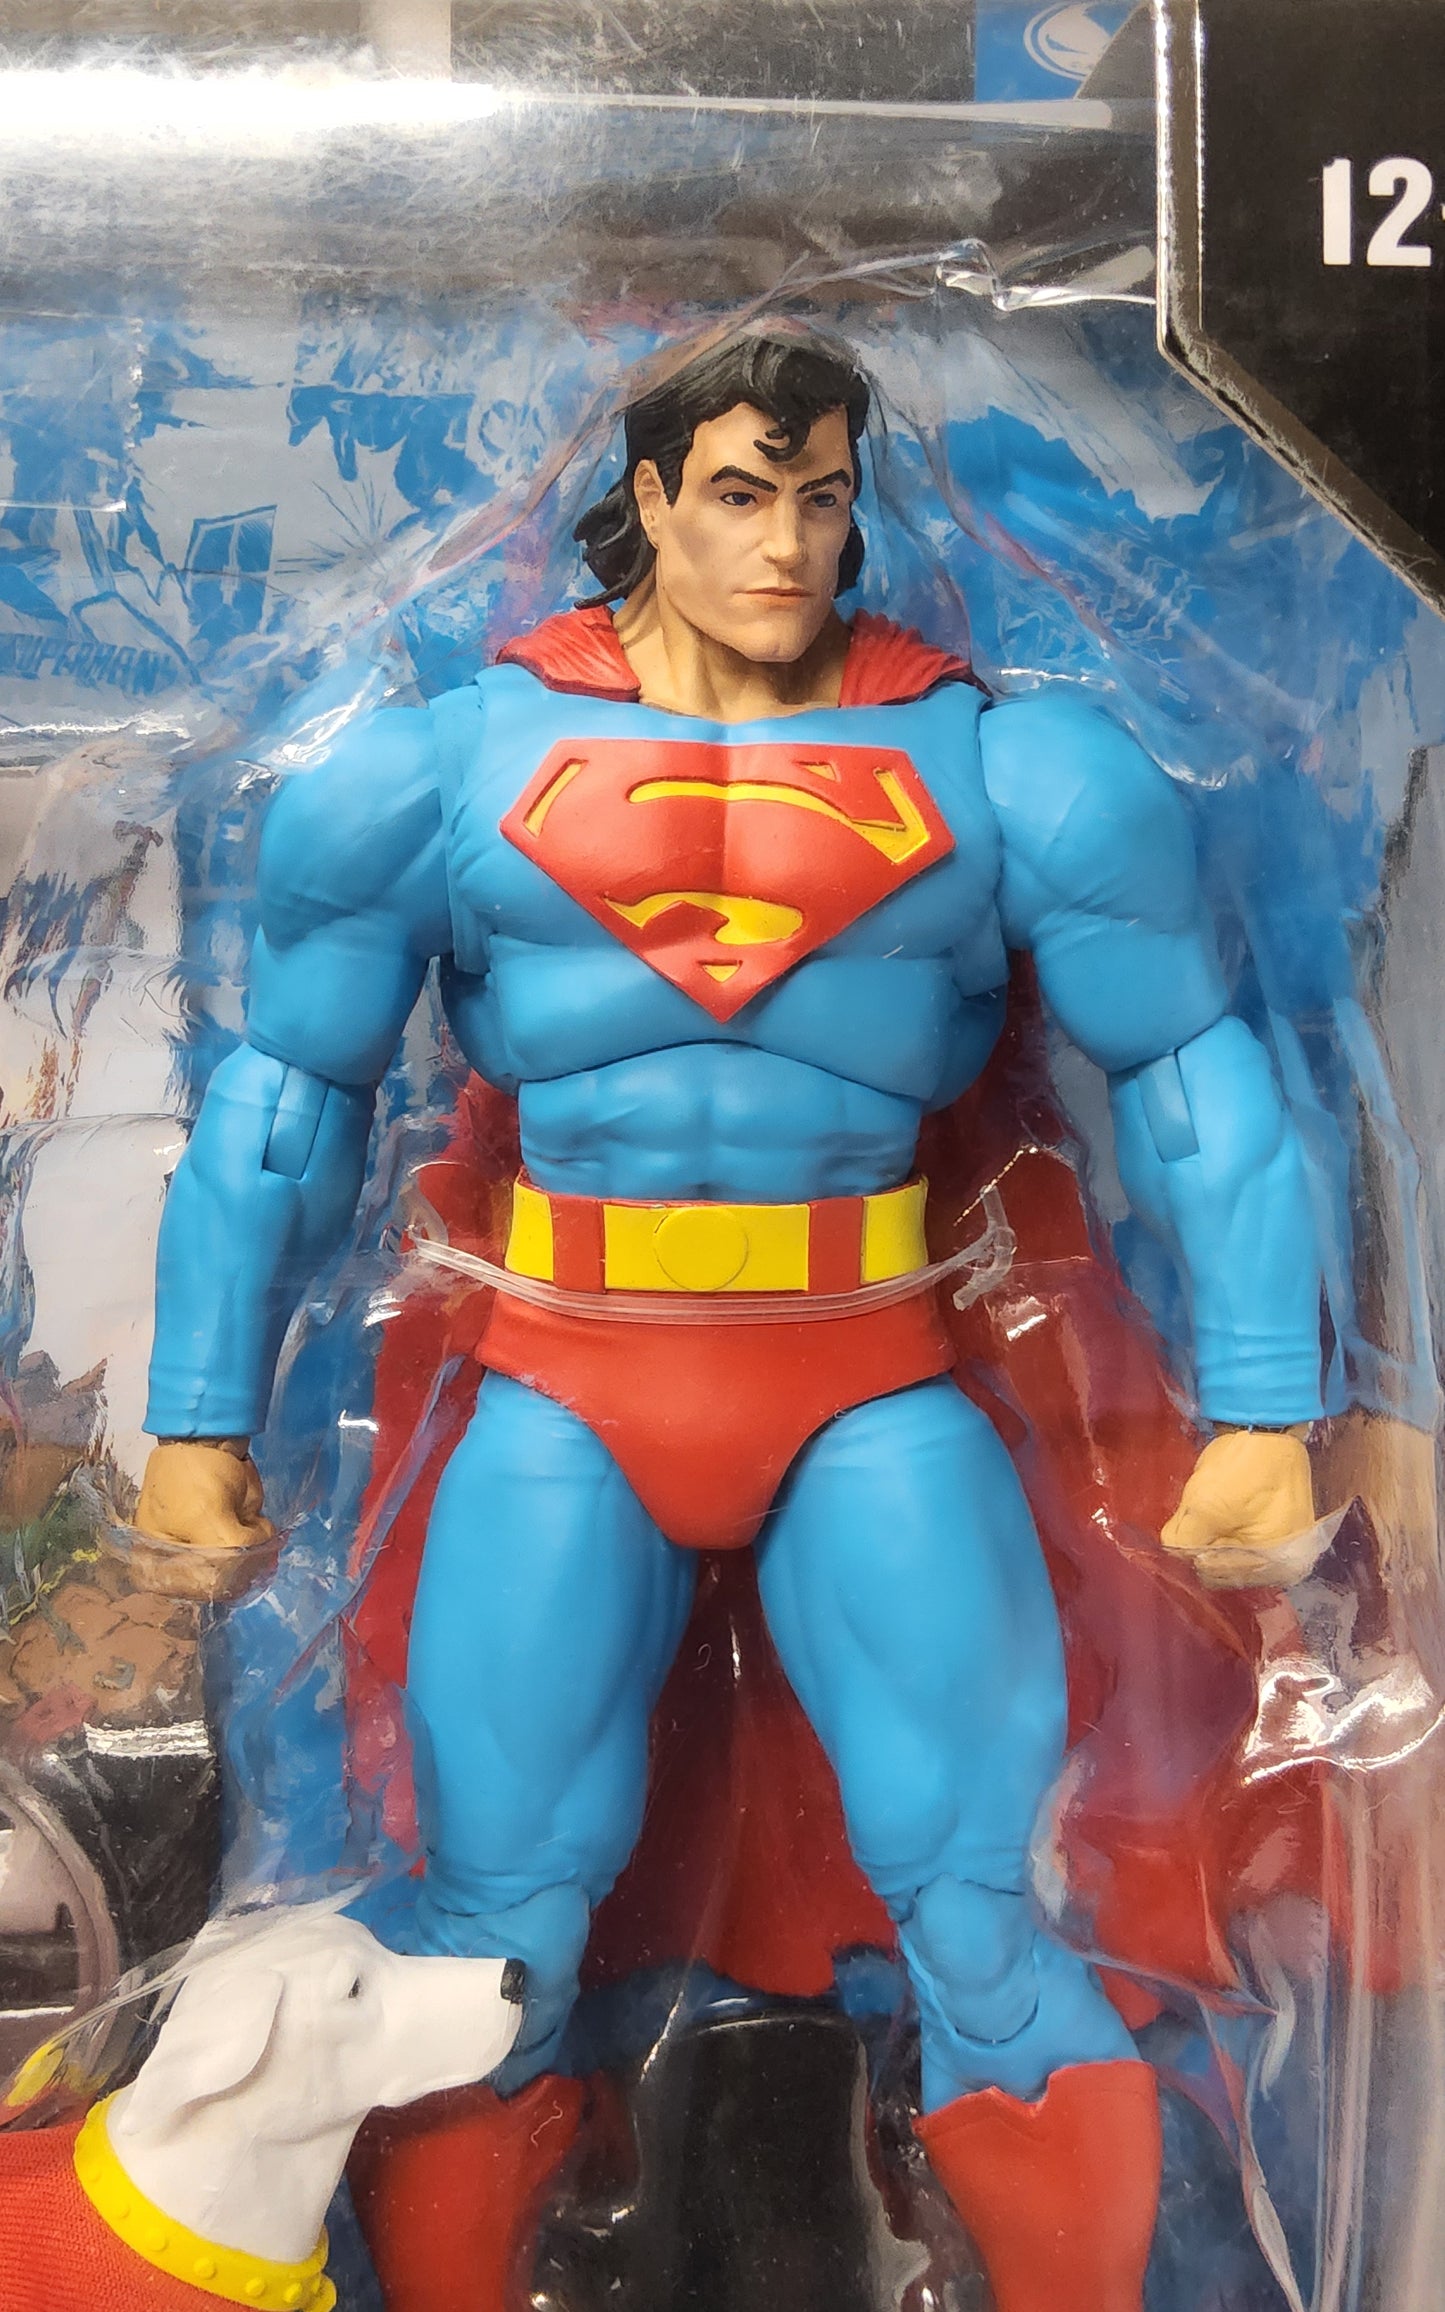 "Superman & Krypto McFarlane Collector Edition #9 - DC Multiverse"